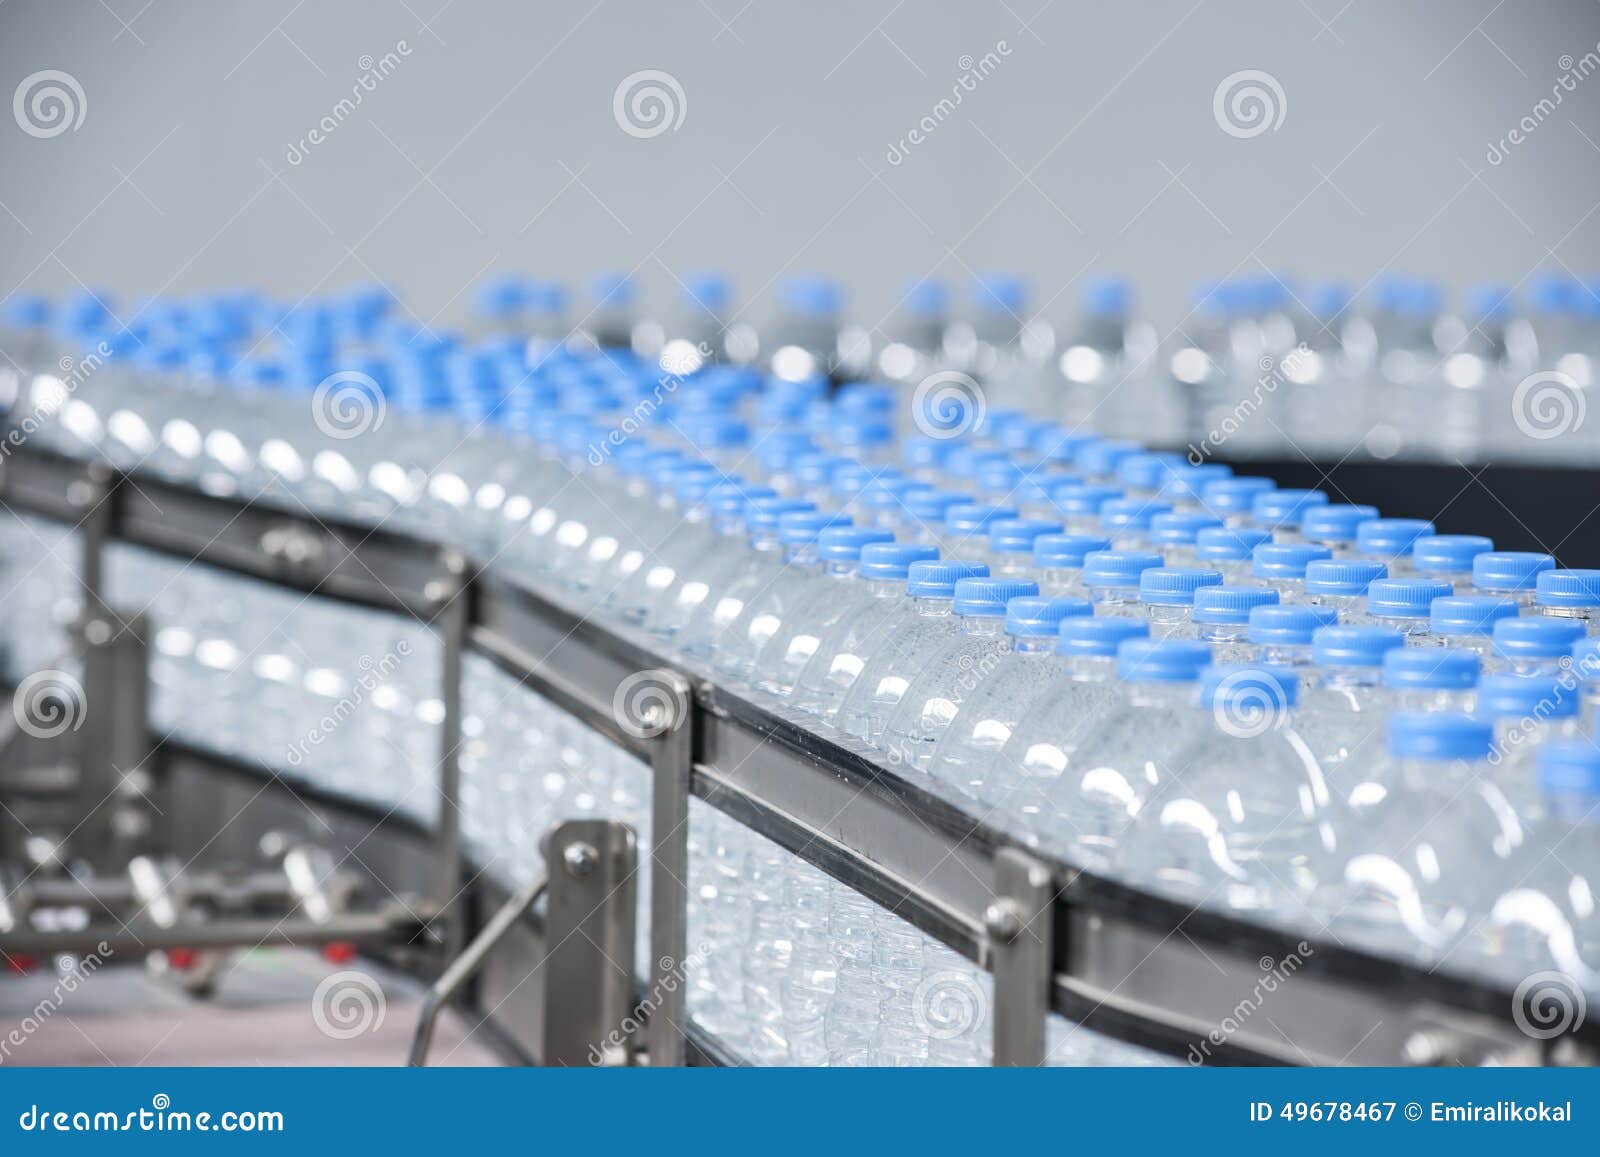 plastic bottles on conveyor belt